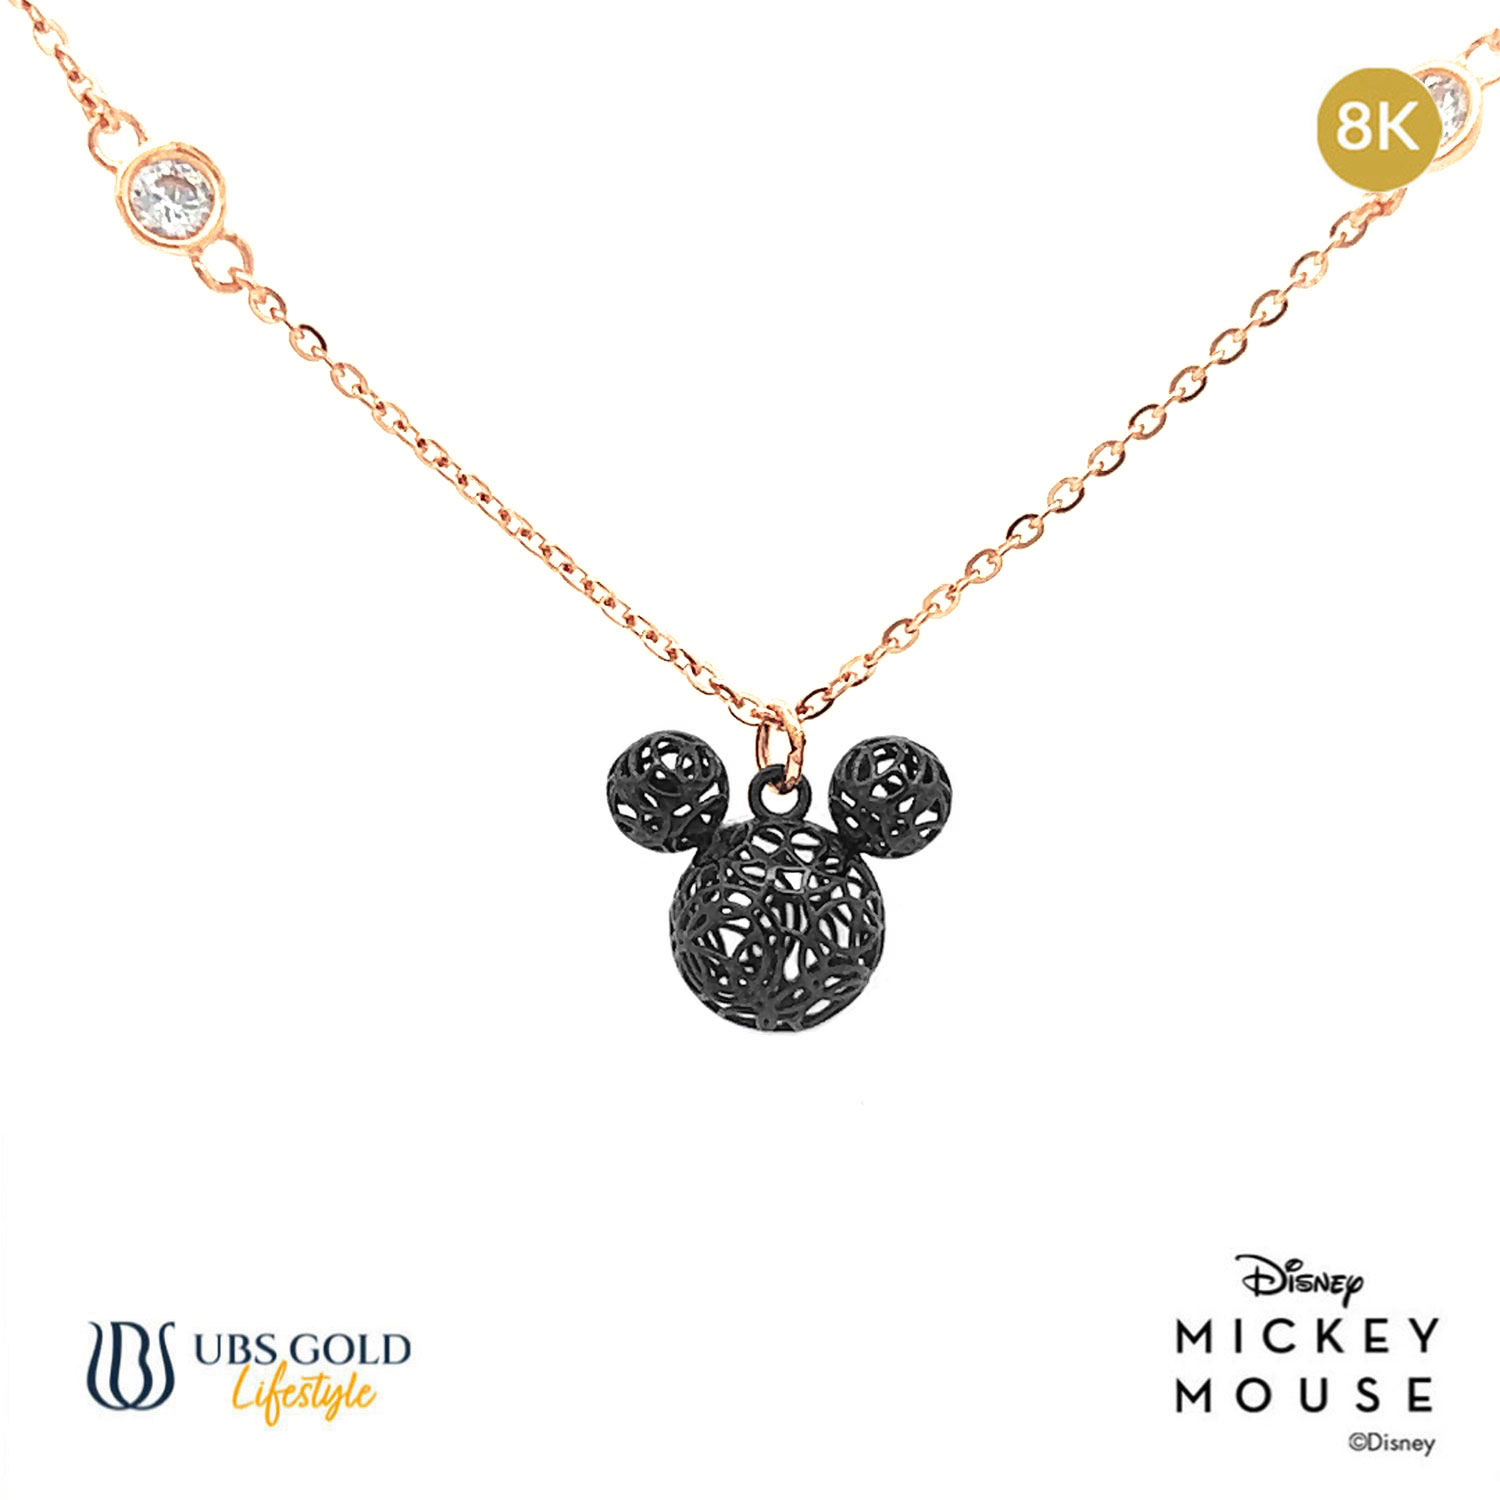 UBS Gold Kalung Emas Disney Mickey Mouse - Kky0455K - 8K